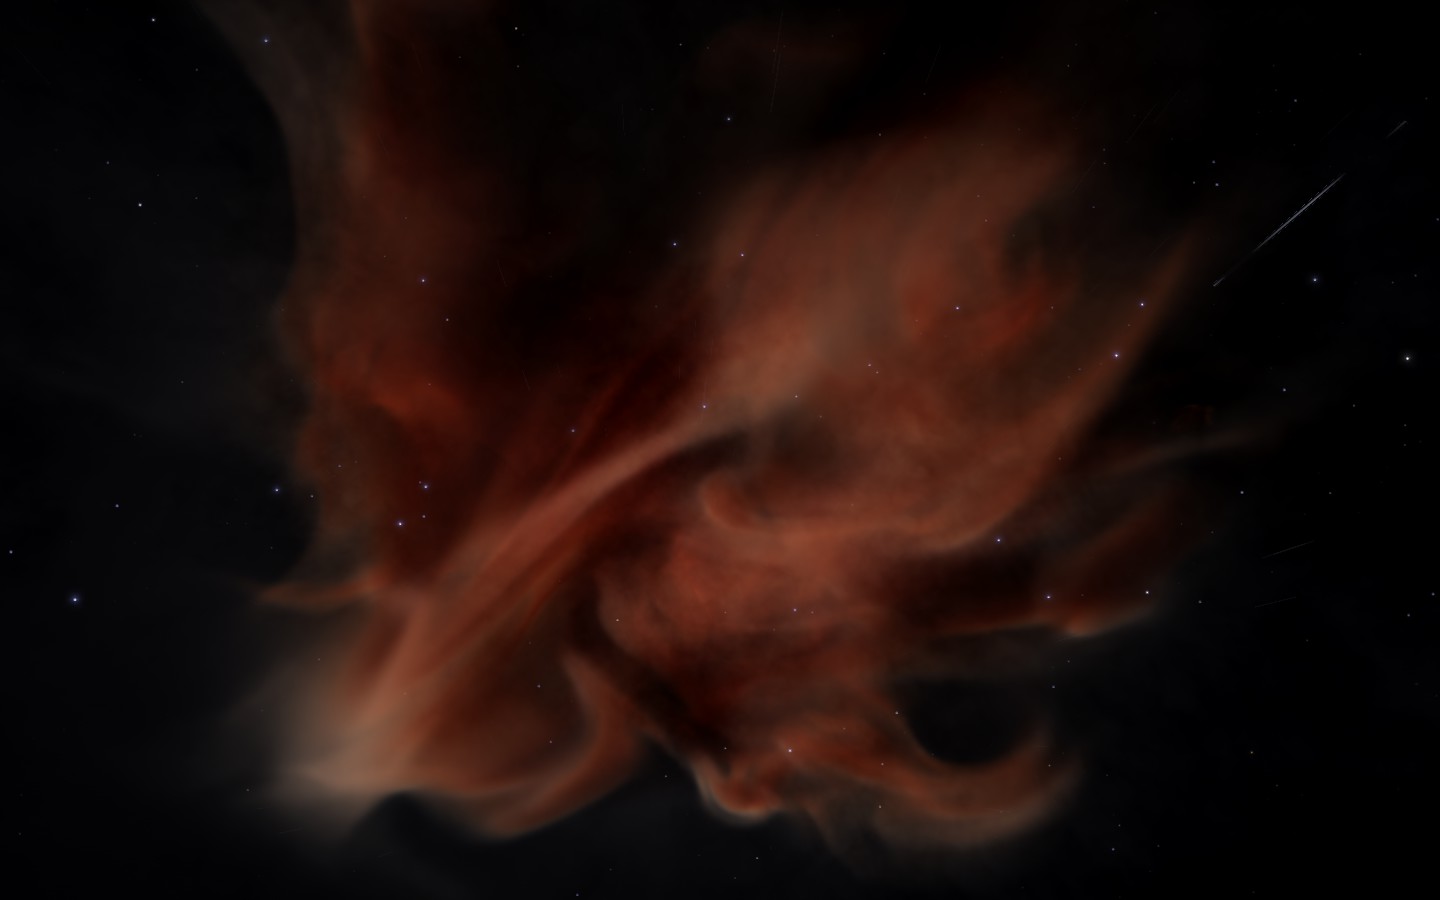 Seagull Nebula as seen a few jumps away from Thor's Helmet Nebula